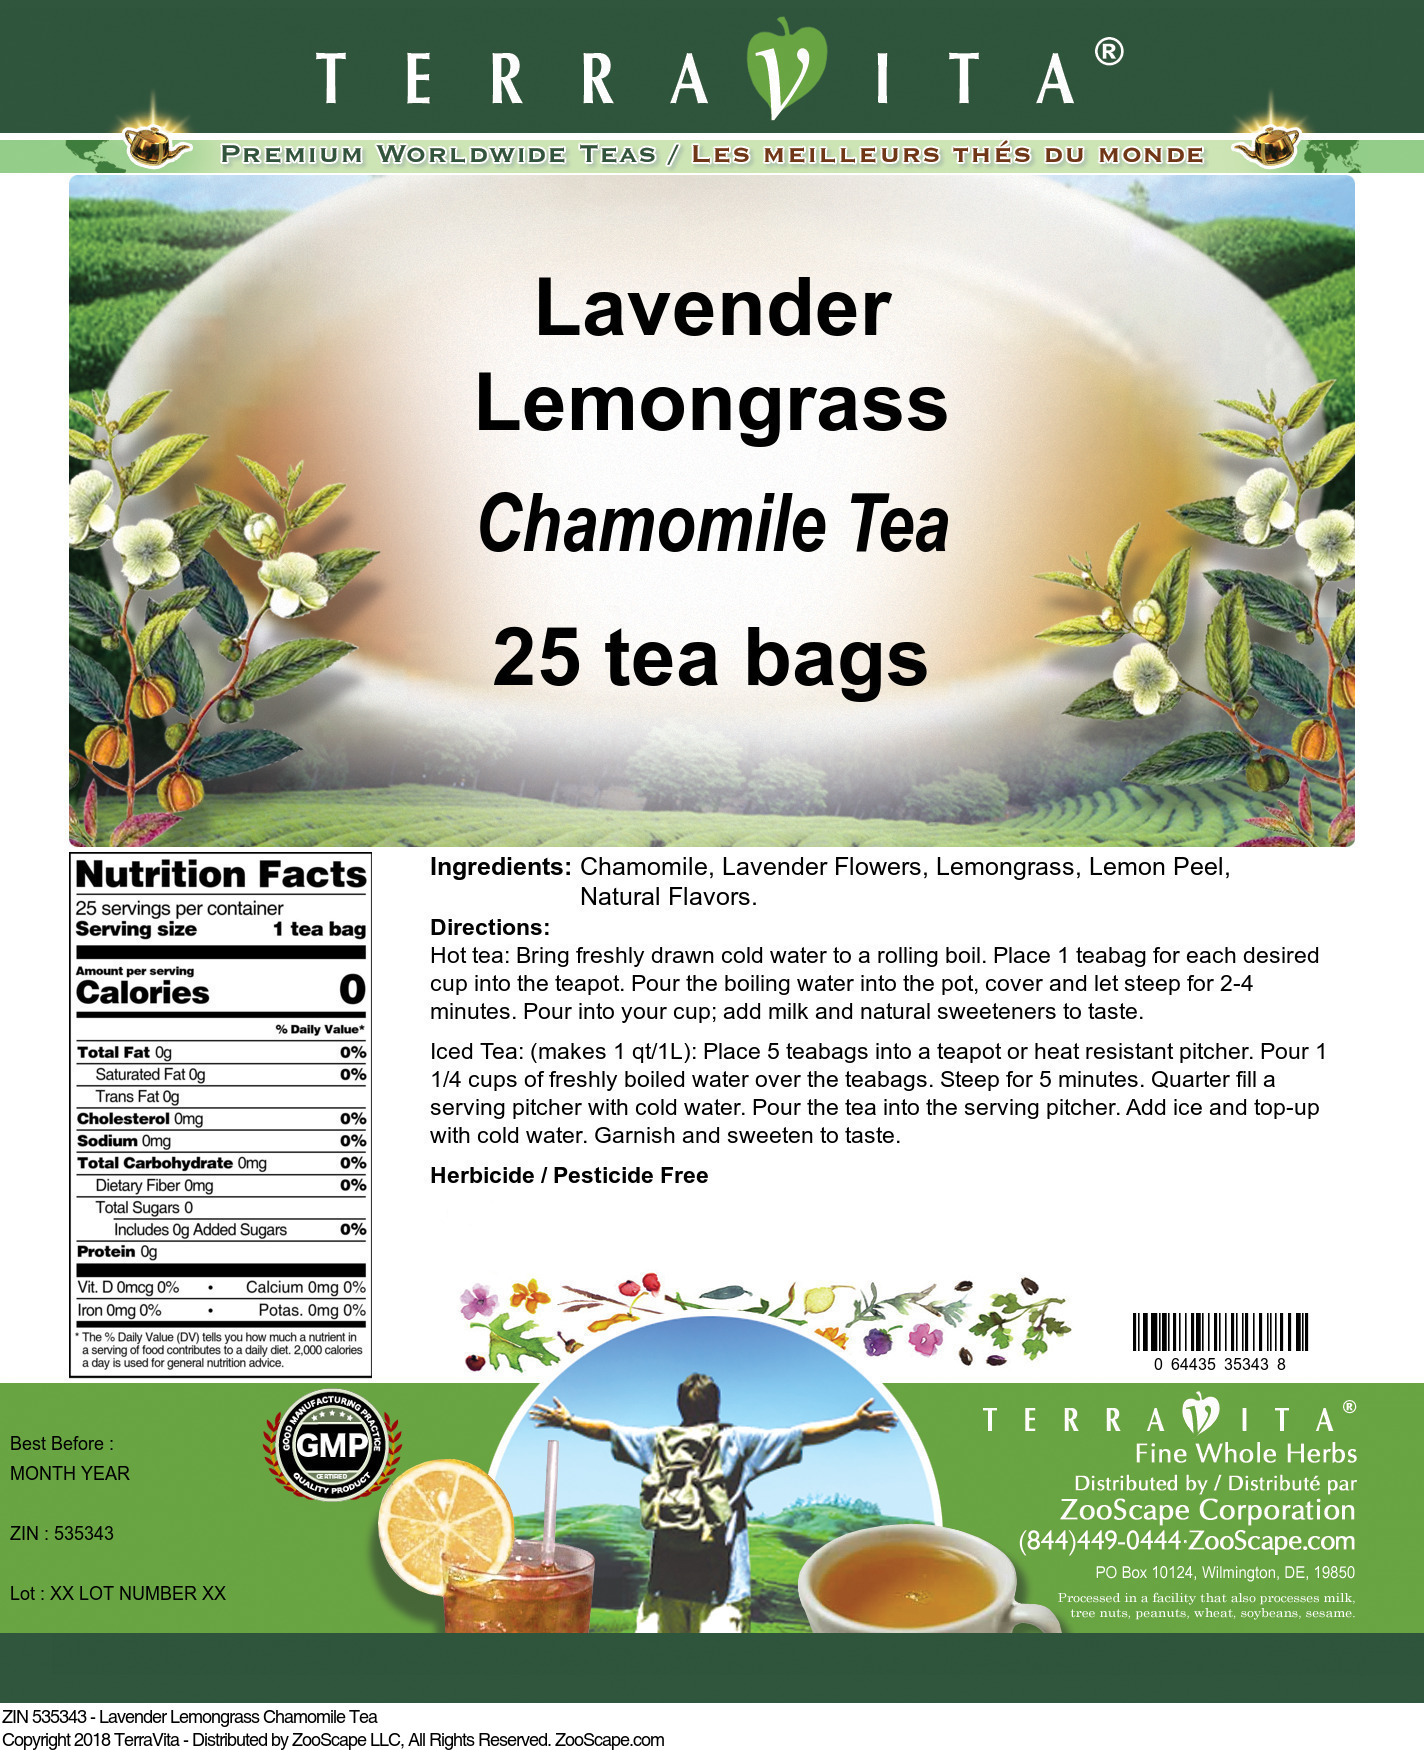 Lavender Lemongrass Chamomile Tea - Label